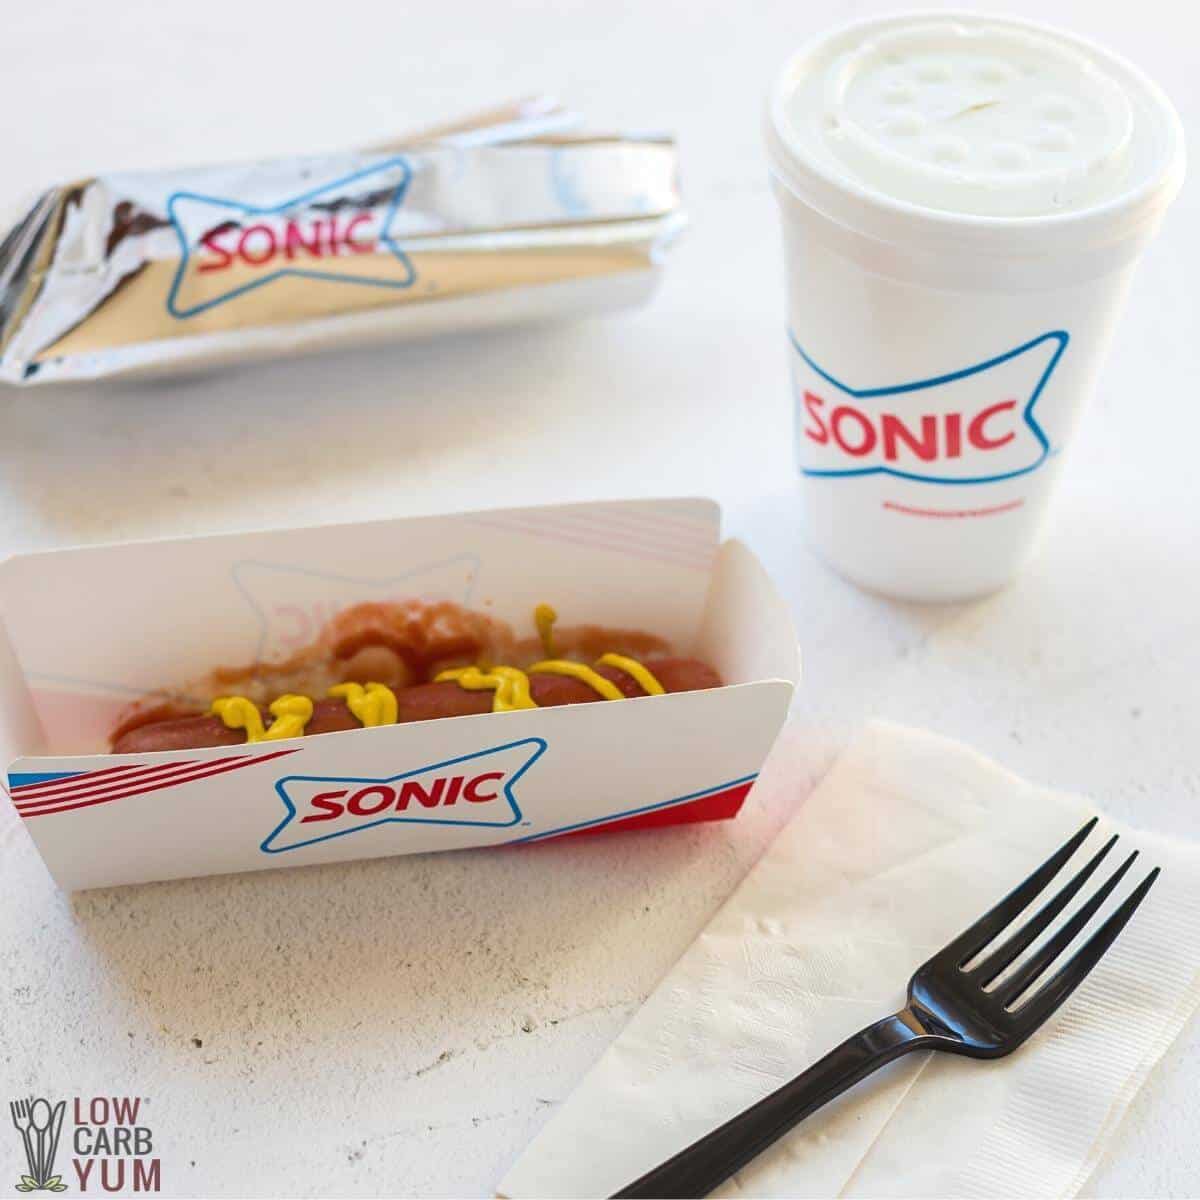 sonic hotdog without bun.